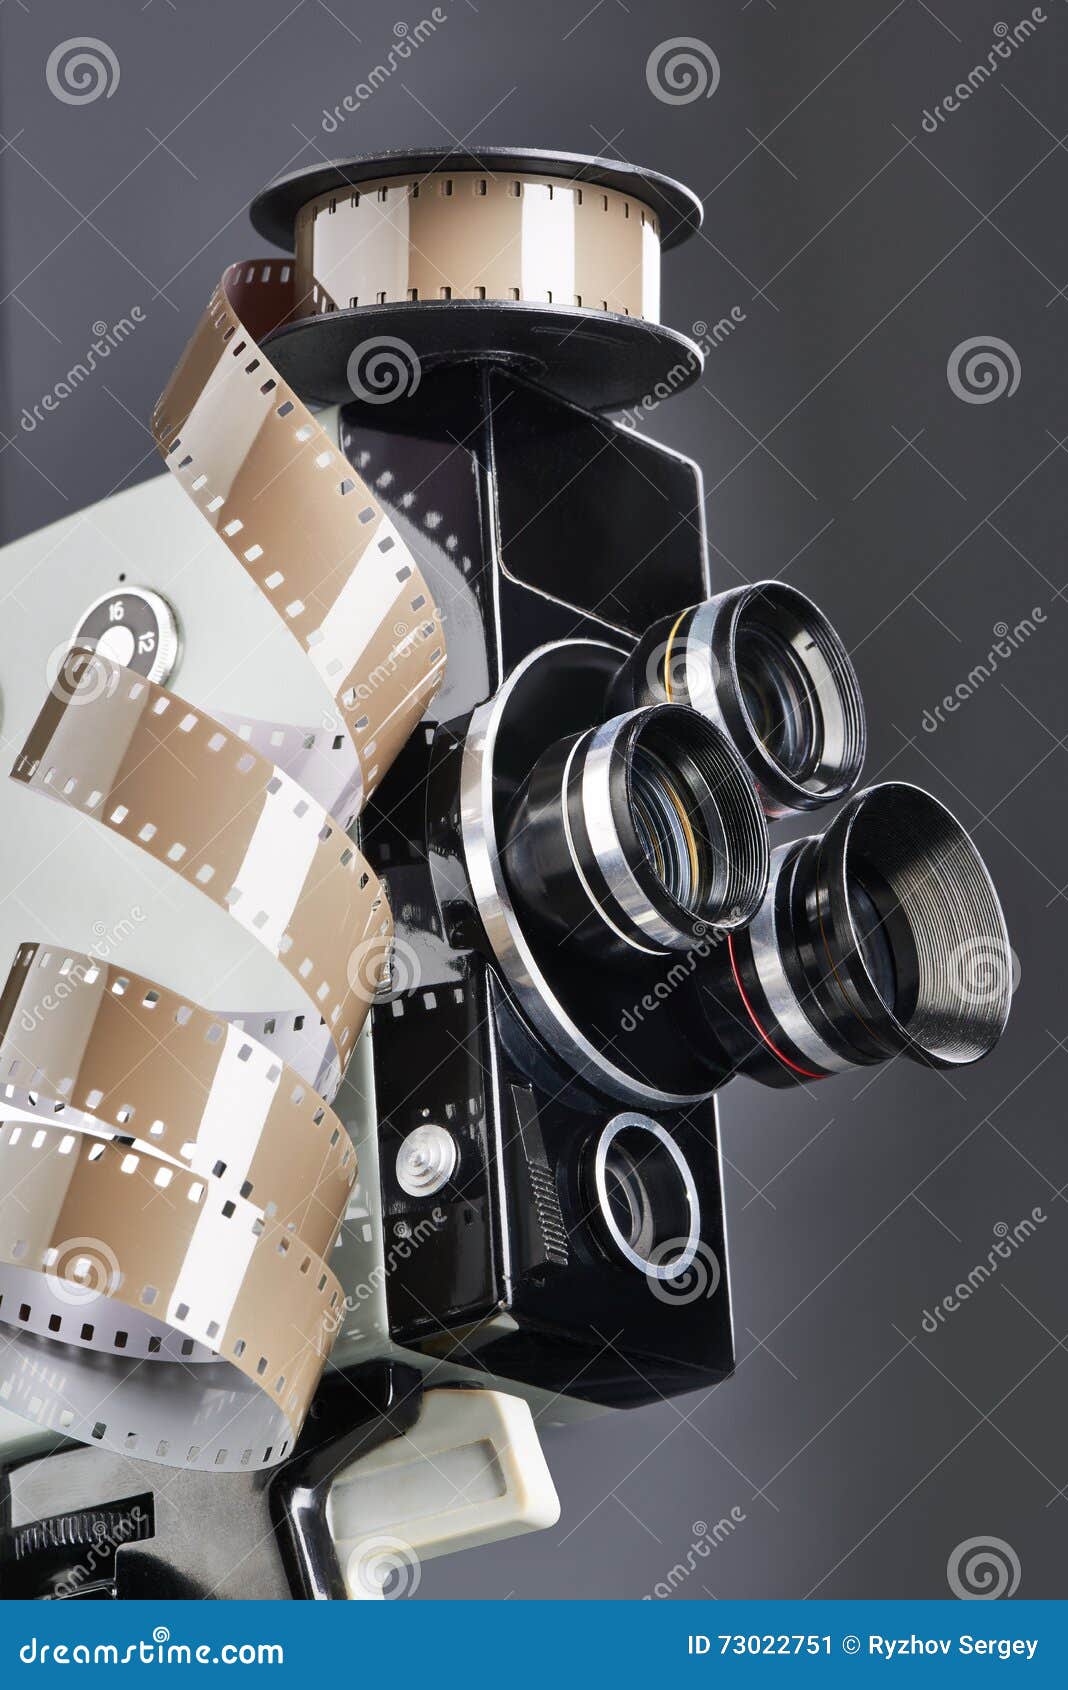 Retro Mechanical Movie Camera and Reel Film Stock Image - Image of lens,  mechanical: 73022751